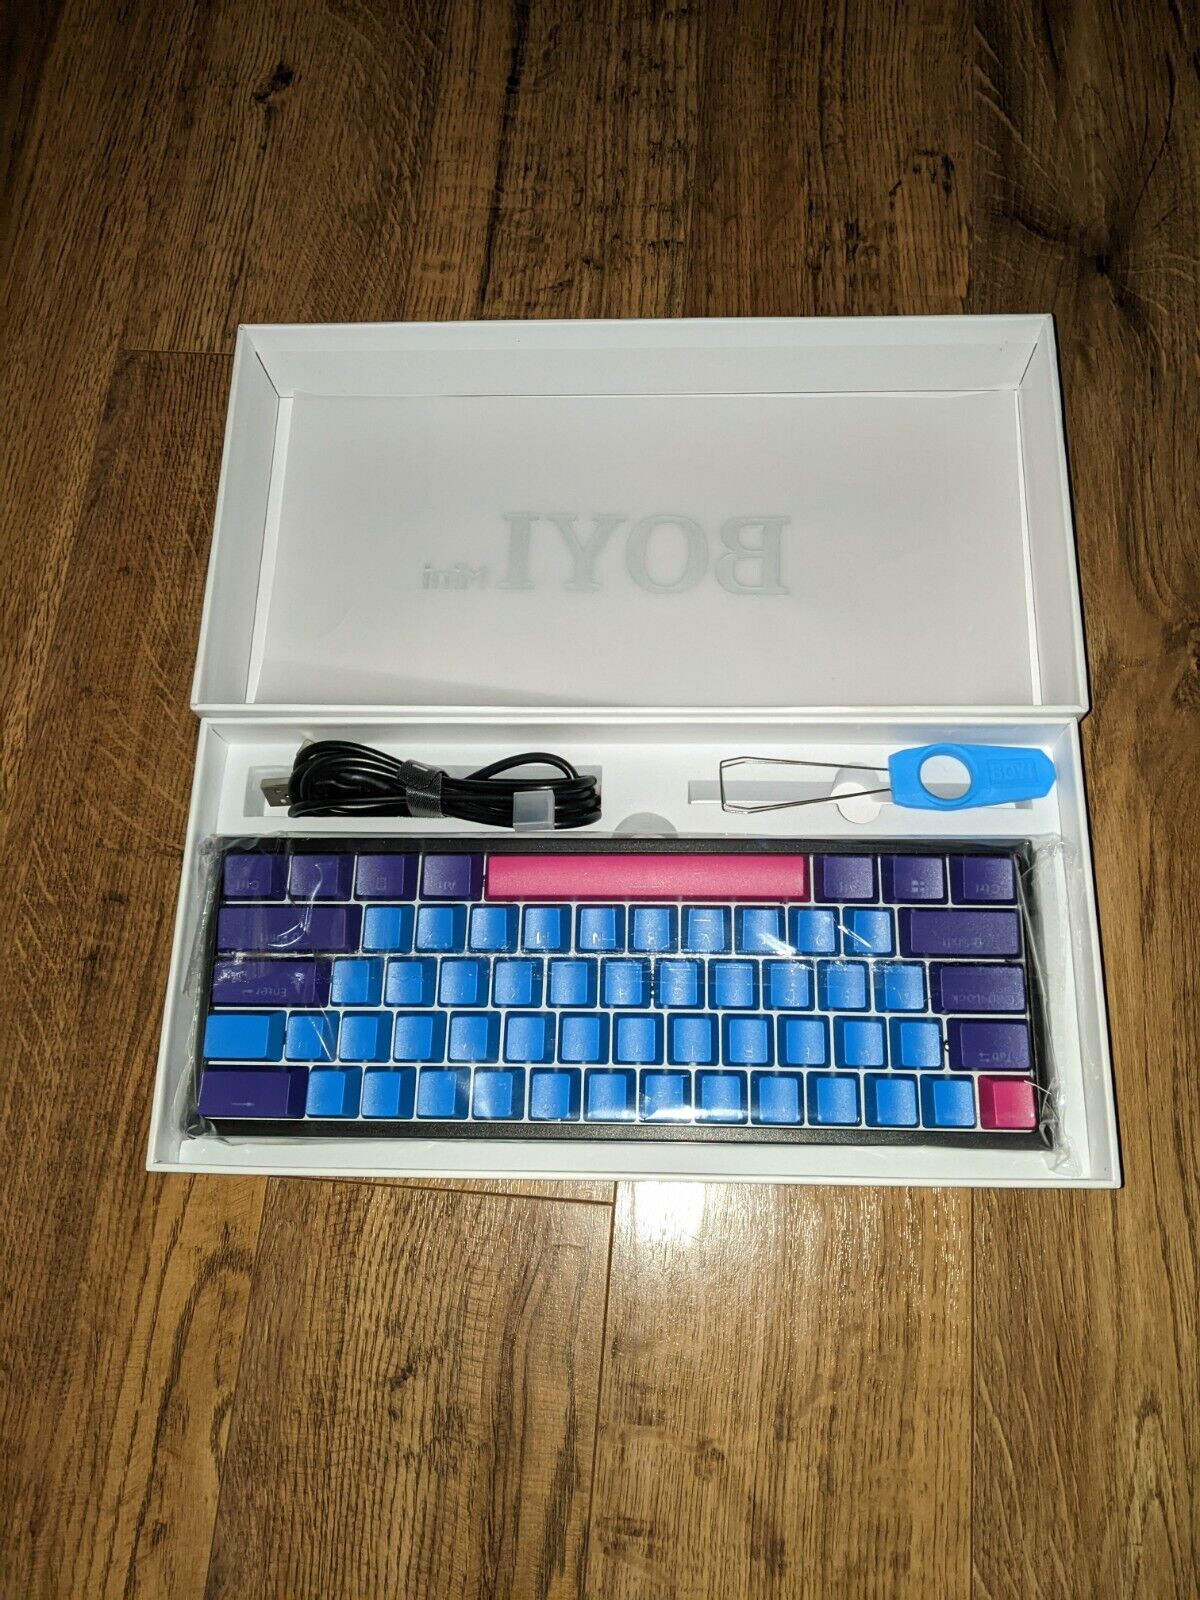 BOYI Wired 60% Mechanical Gaming Keyboard,Mini RGB Cherry MX Switch PBT Keycaps